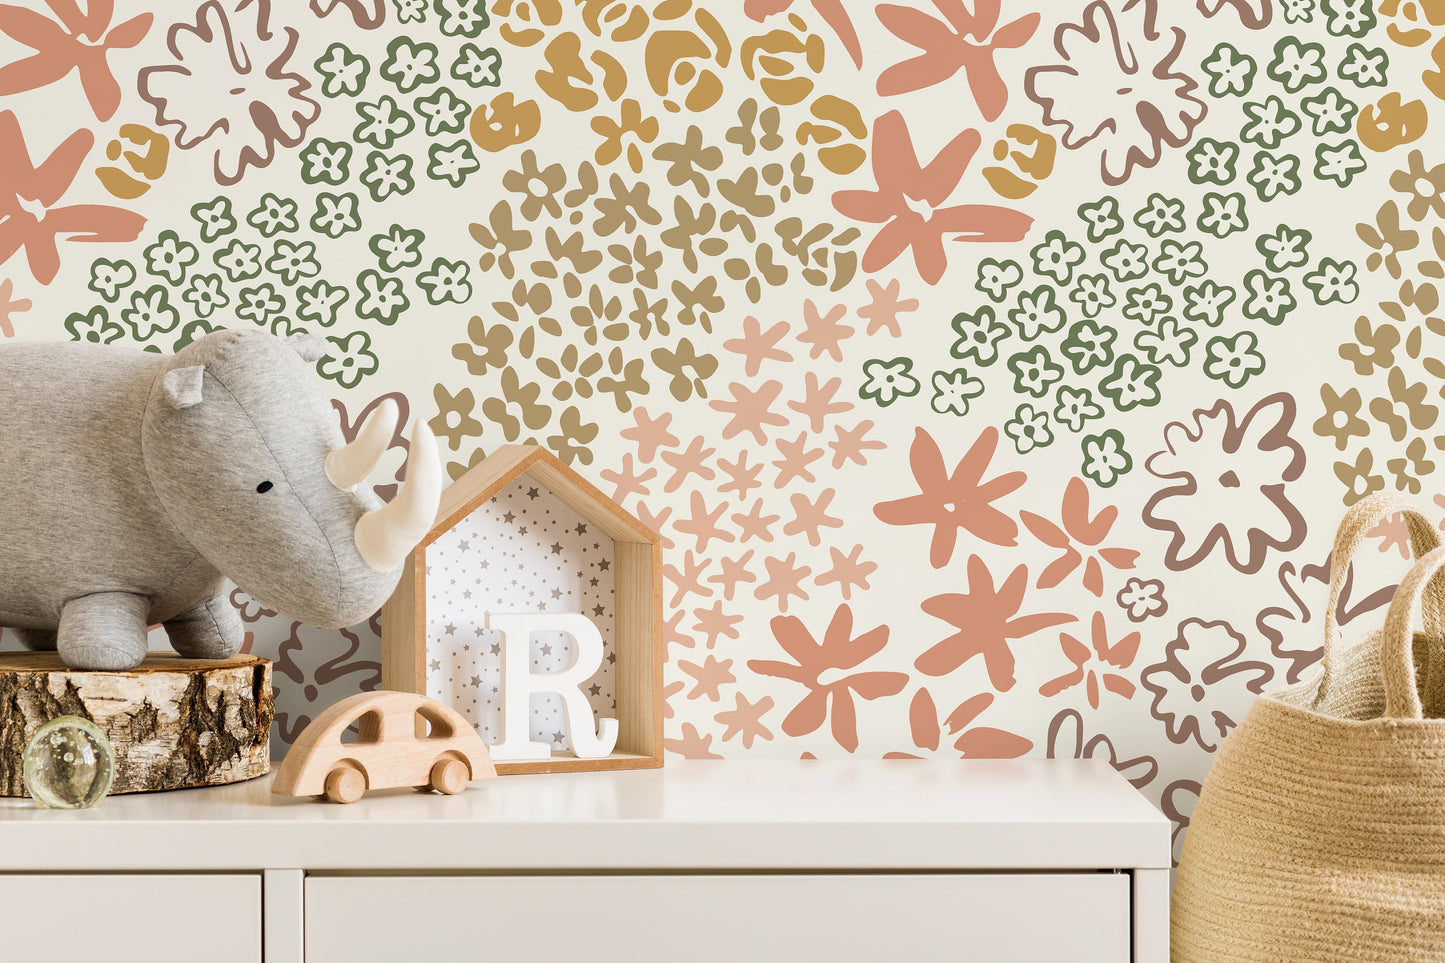 Cute Floral Hand Drawing Wallpaper / Peel and Stick Wallpaper Removable Wallpaper Home Decor Wall Art Wall Decor Room Decor - D166